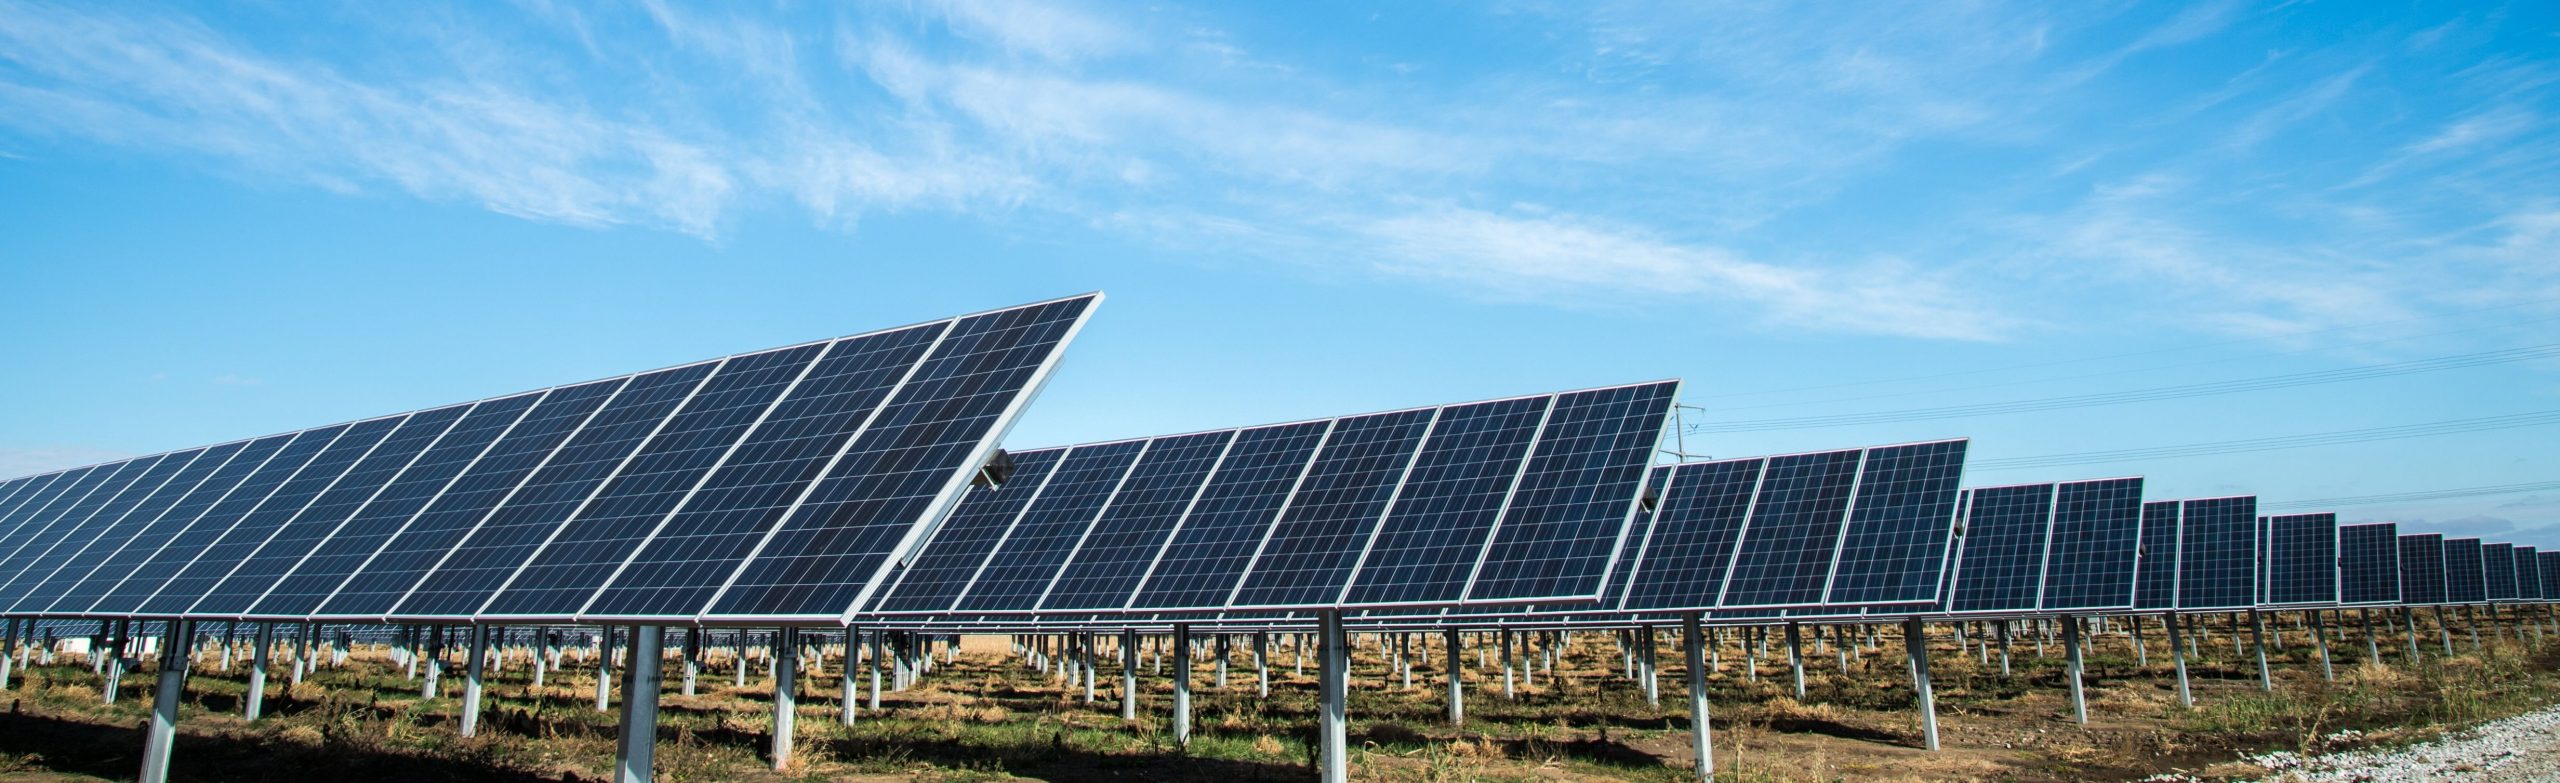 AleaSoft - Solar panels renewable